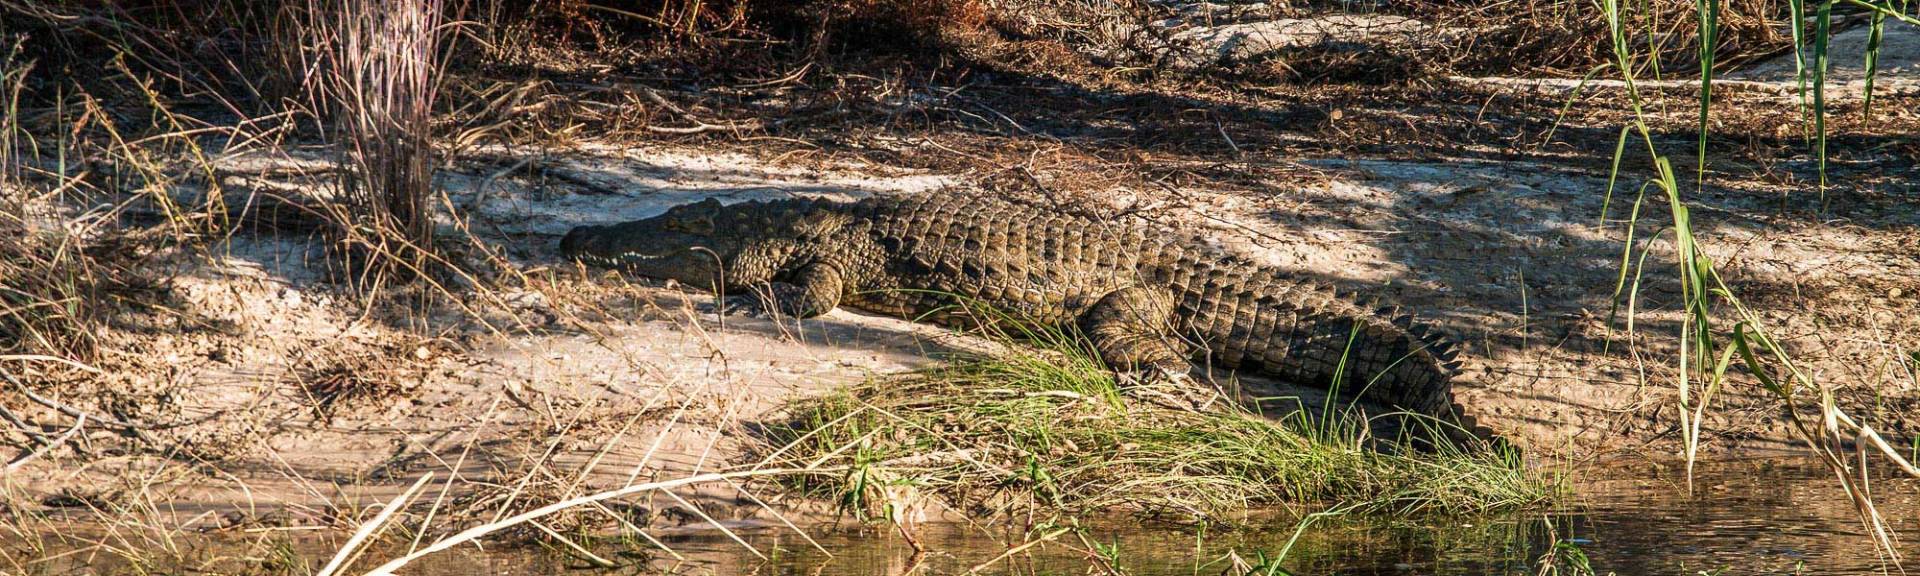 Crocodile in the Okavango River